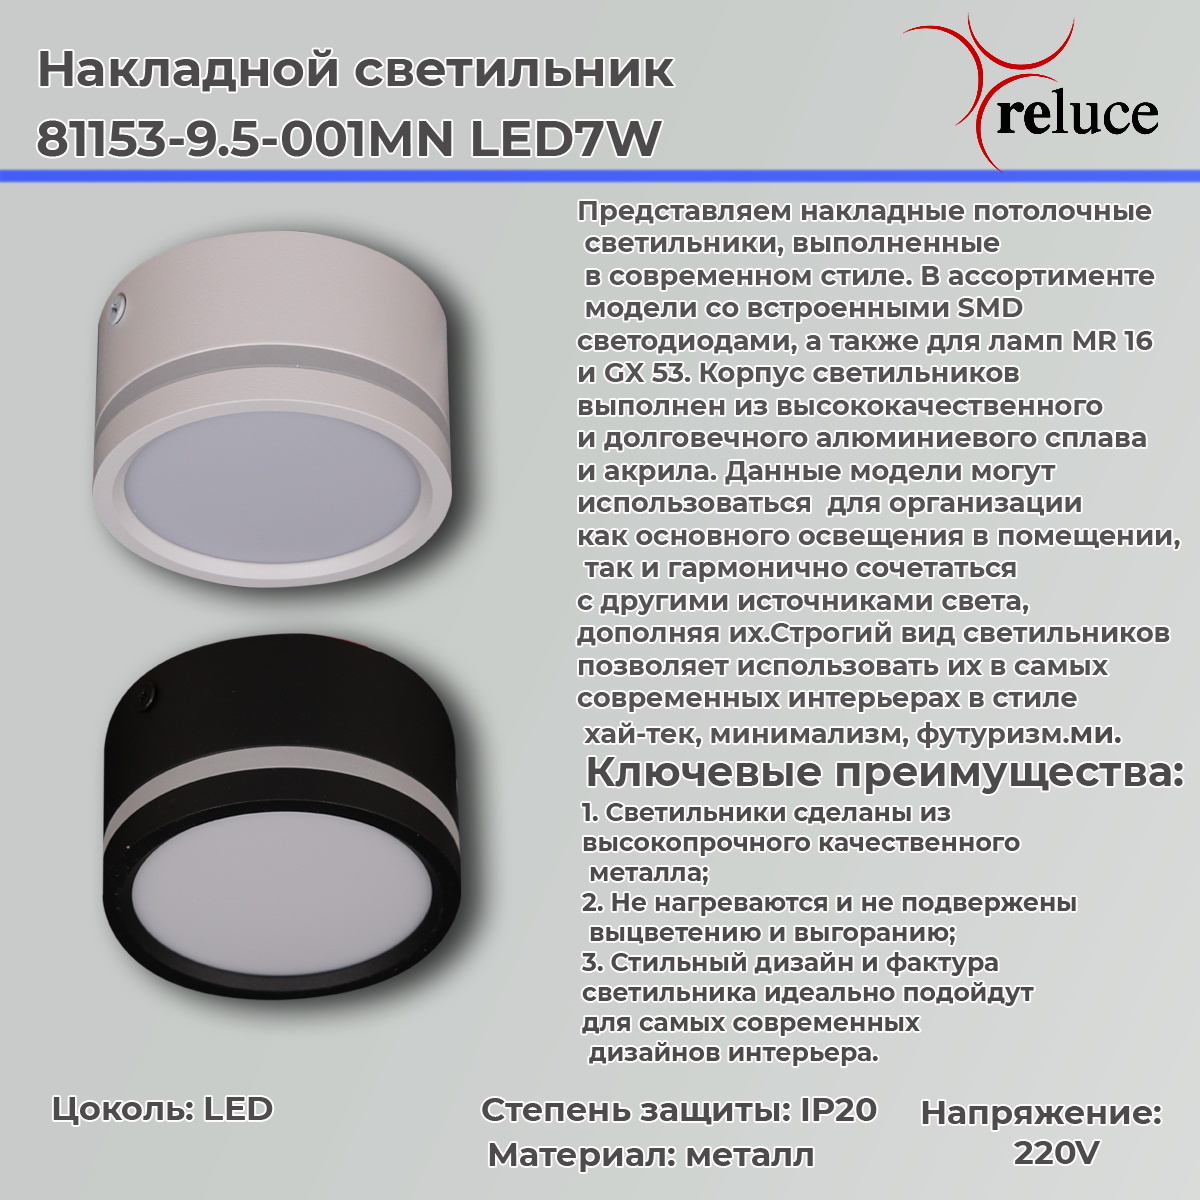 Накладной светильник Reluce 81153-9.5-001MN LED7W WH